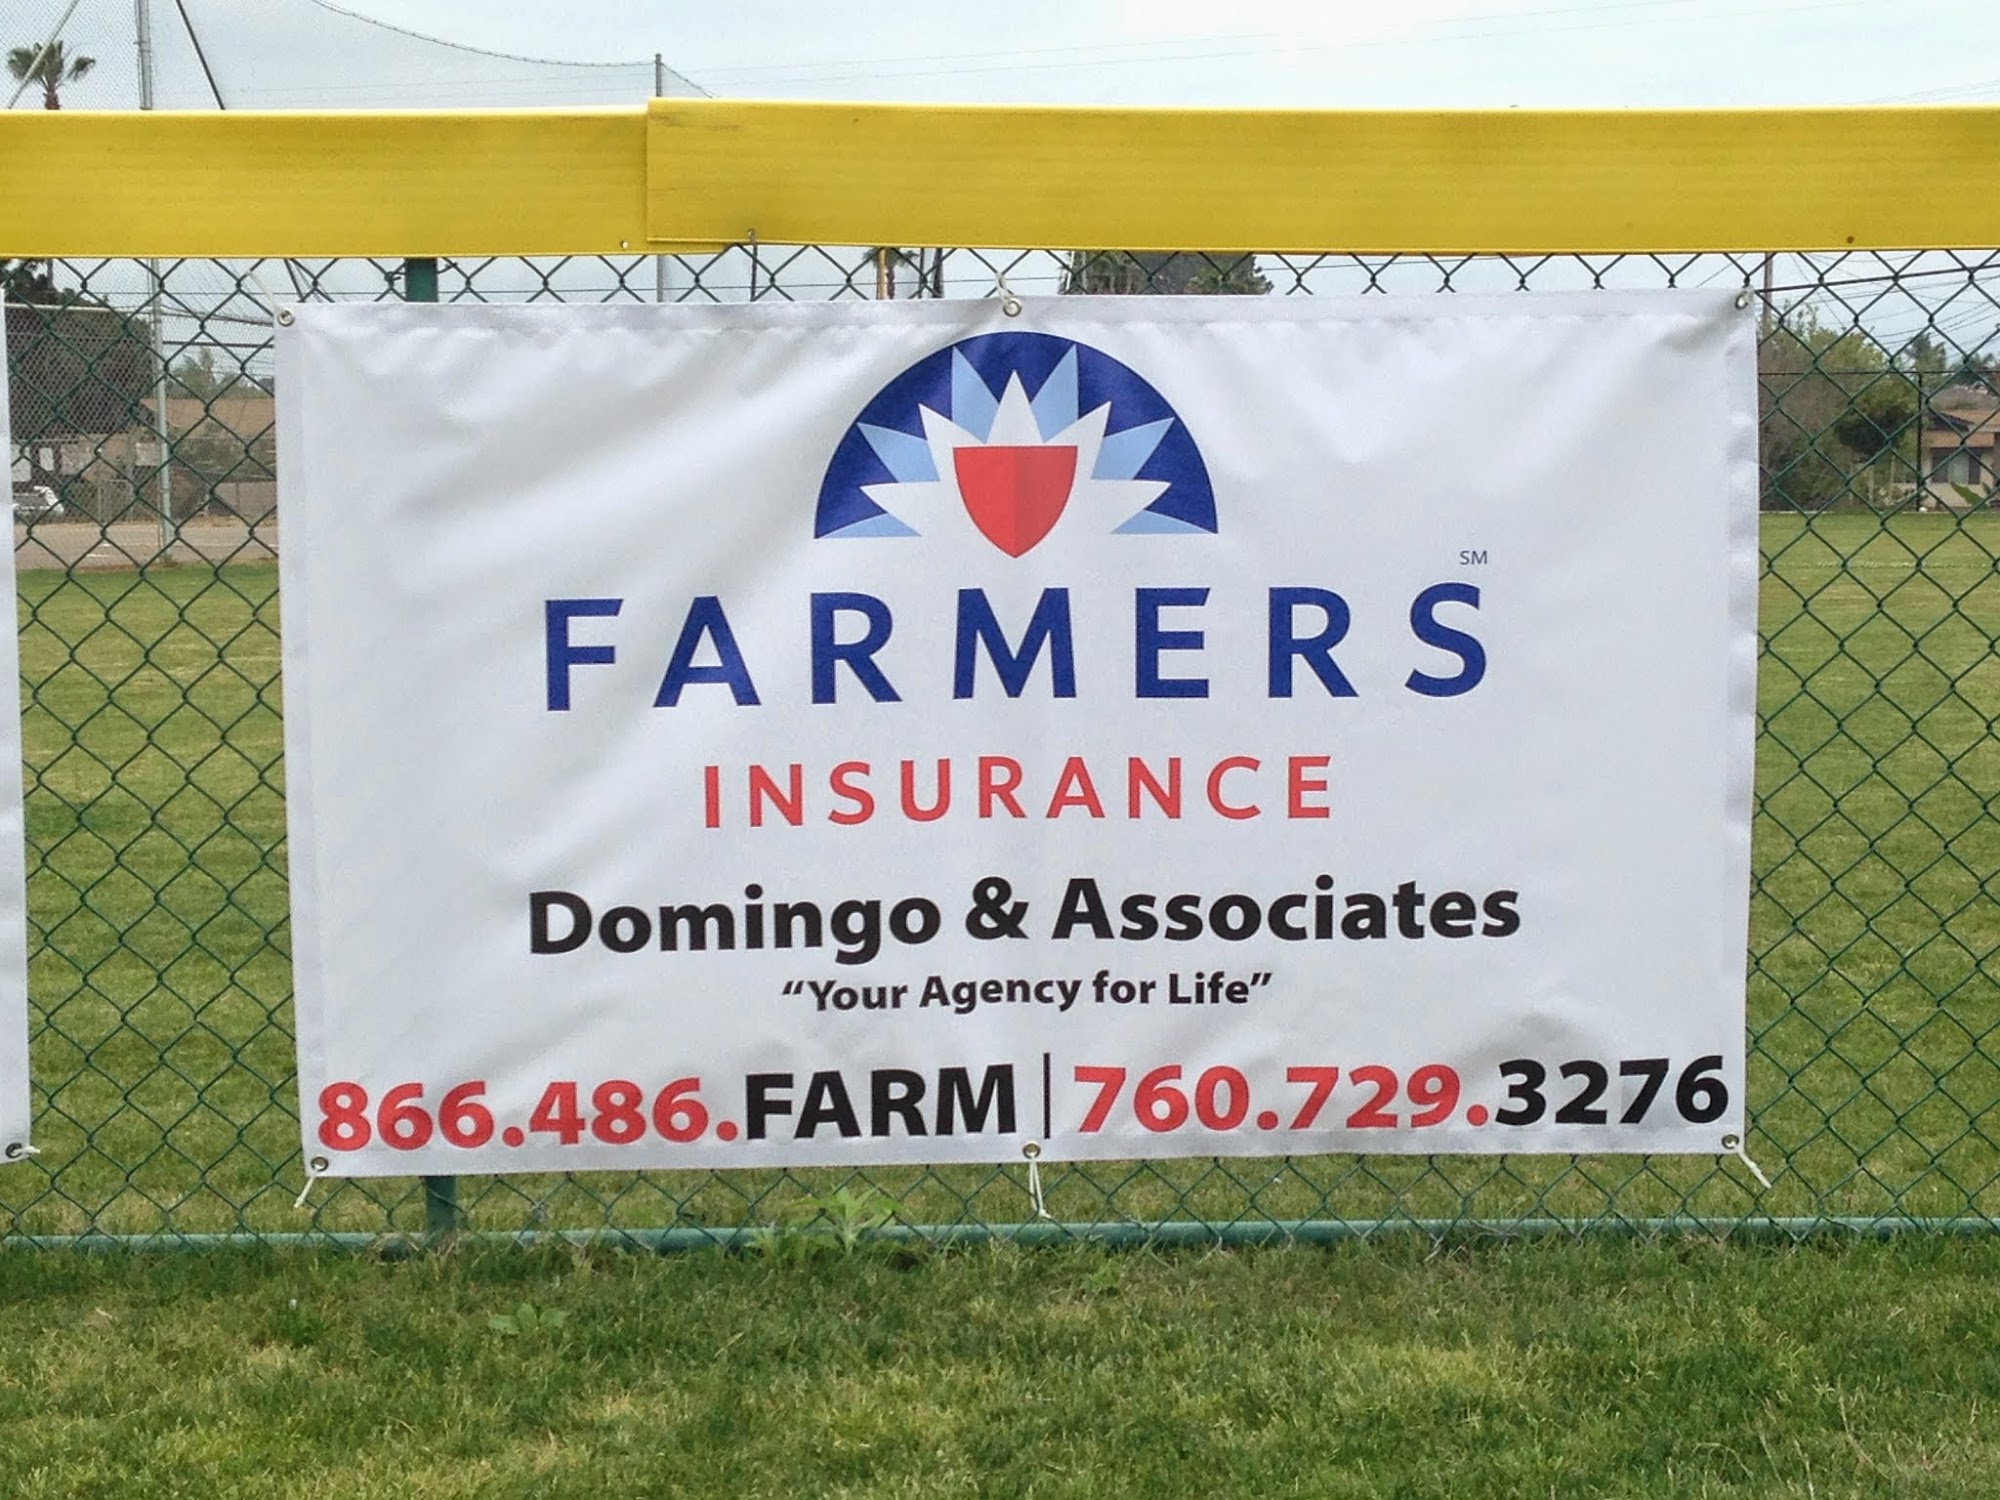 Domingo & Associates, FARMERS